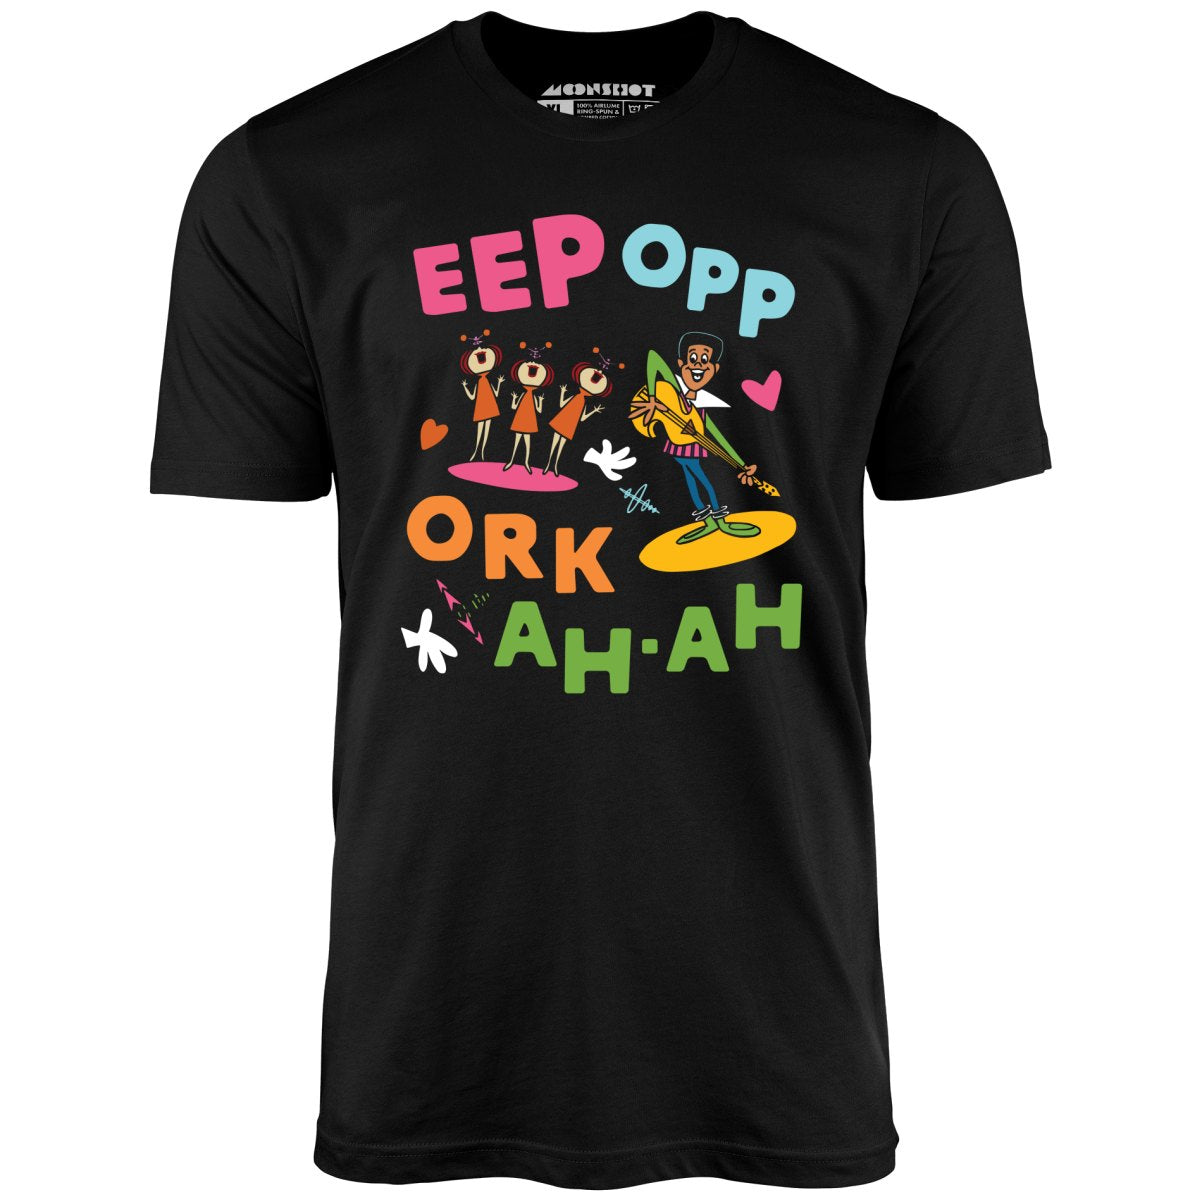 Eep Opp Ork Ah Ah - Unisex T-Shirt